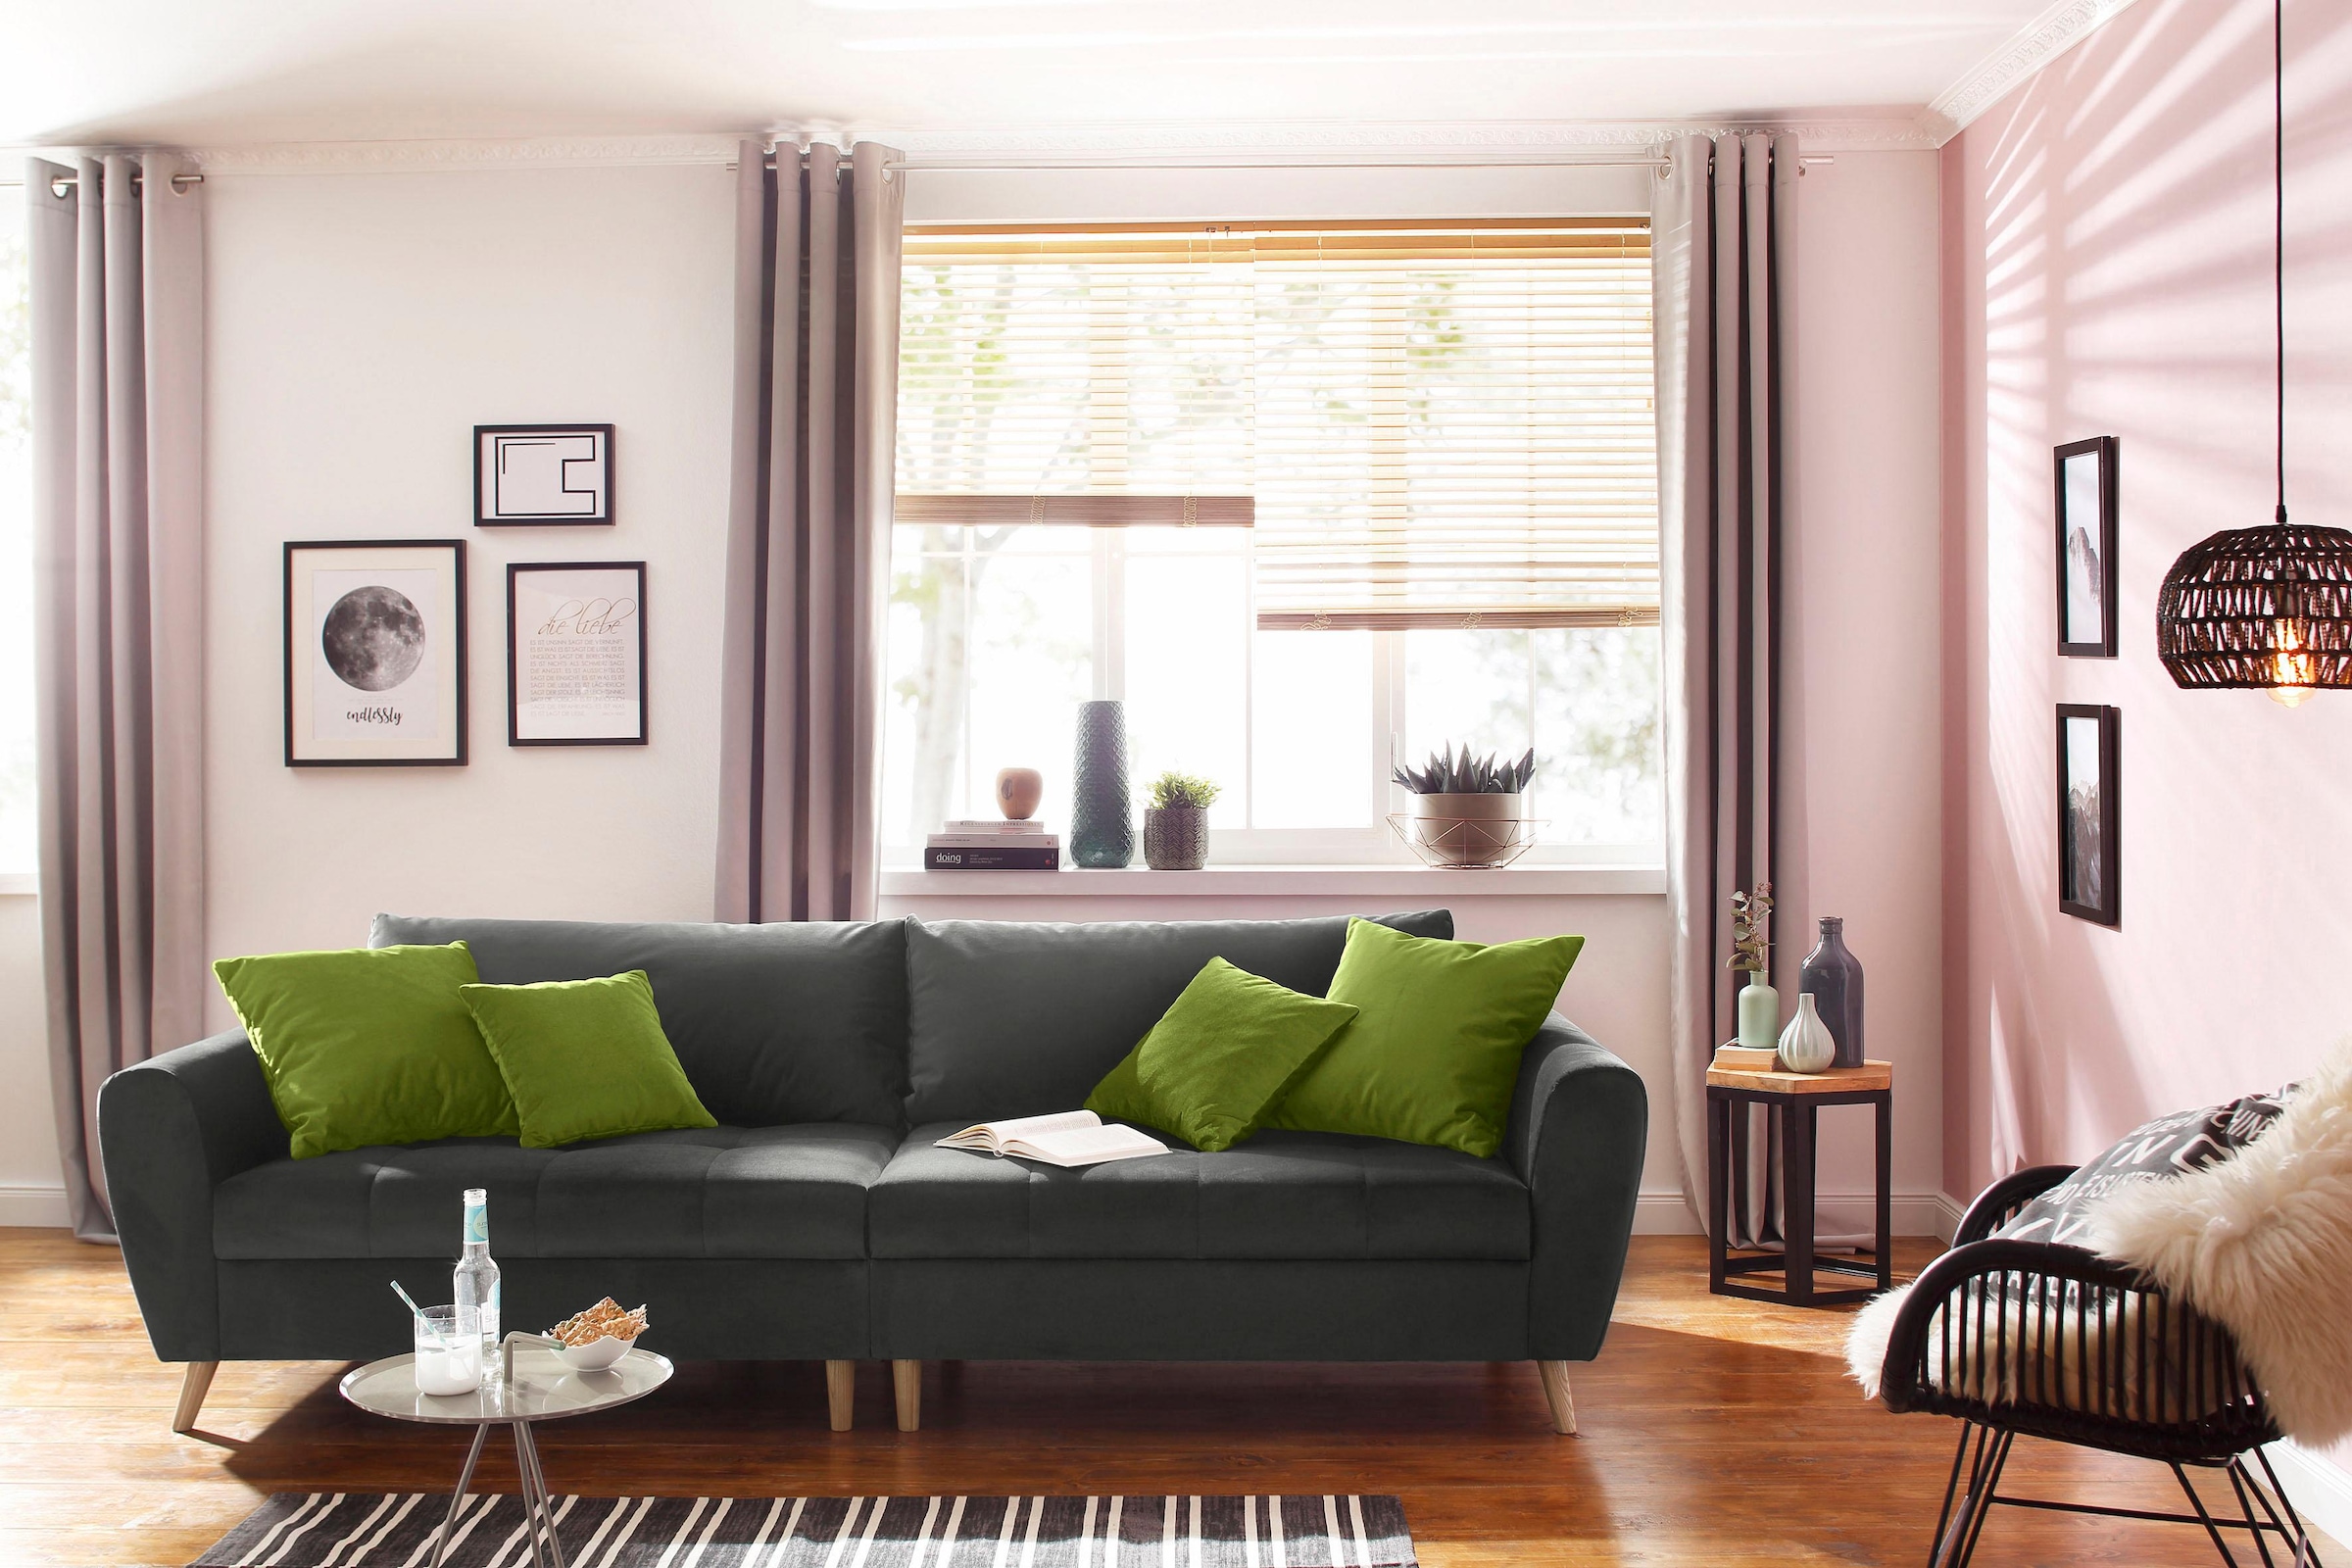 Home affaire Big-Sofa »Penelope«, Design bei Steppung, lose Kissen, feine OTTO online skandinavisches